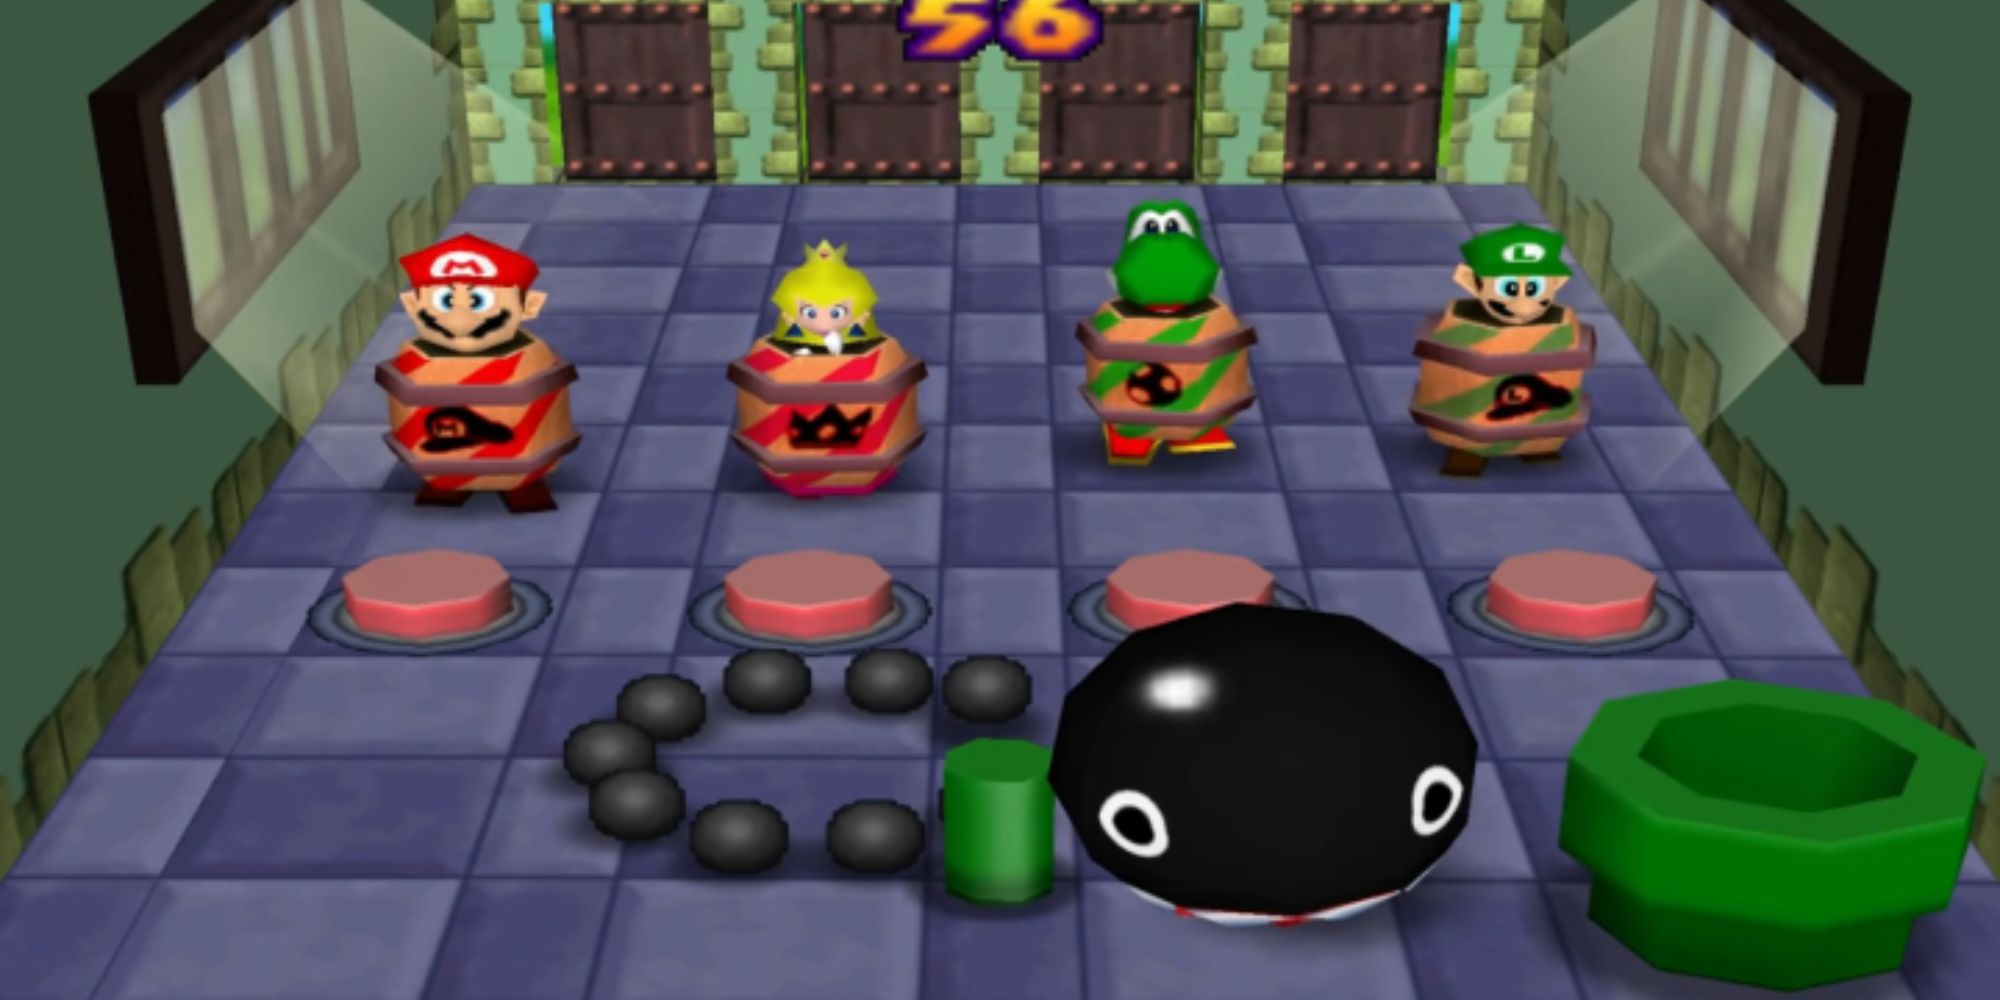 Mario, Peach, Yoshi, and Luigi sneak up on a Chain Chomp